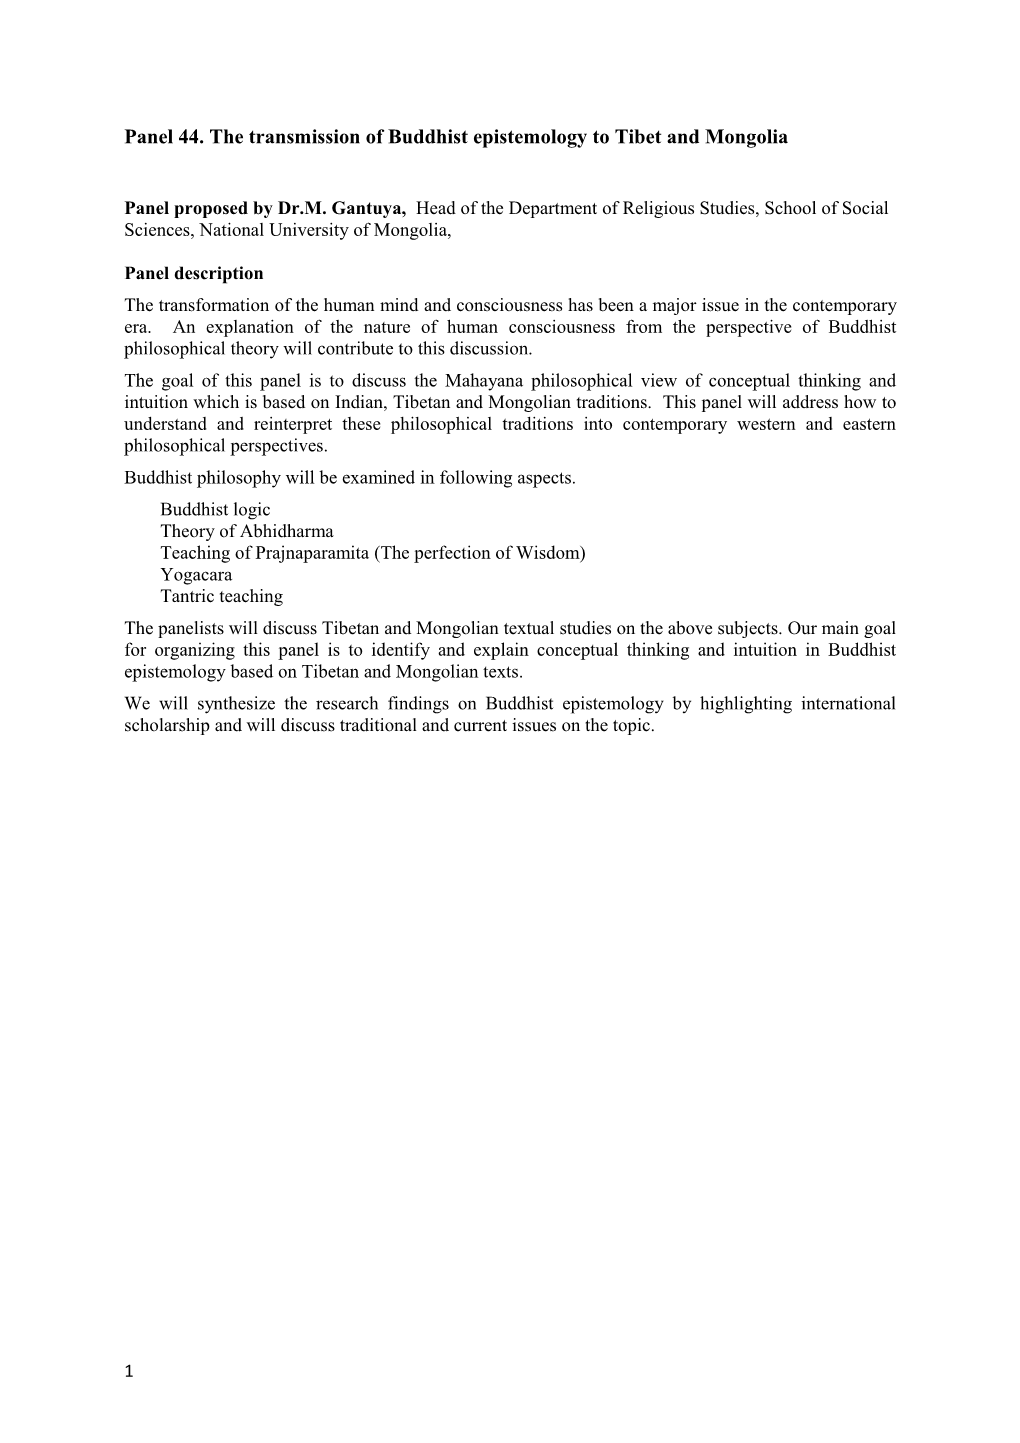 Mongolian Panel 6. Buddhist Epistemology. Panel Description and CV